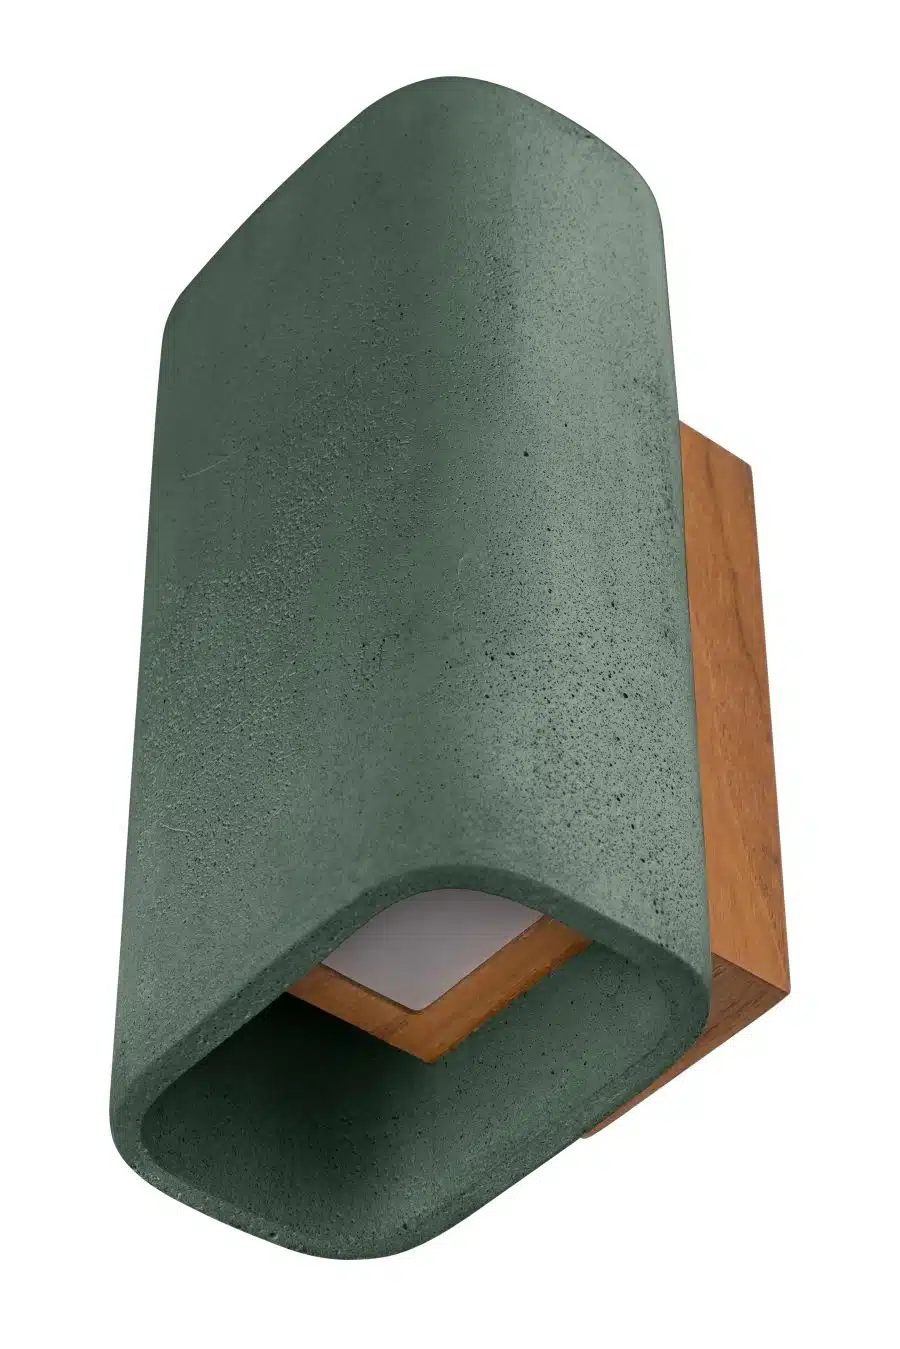 Con Teak loftlight asparagus groen chocolate buitenlamp beton concrete teak tuinextra kaatsheuvel